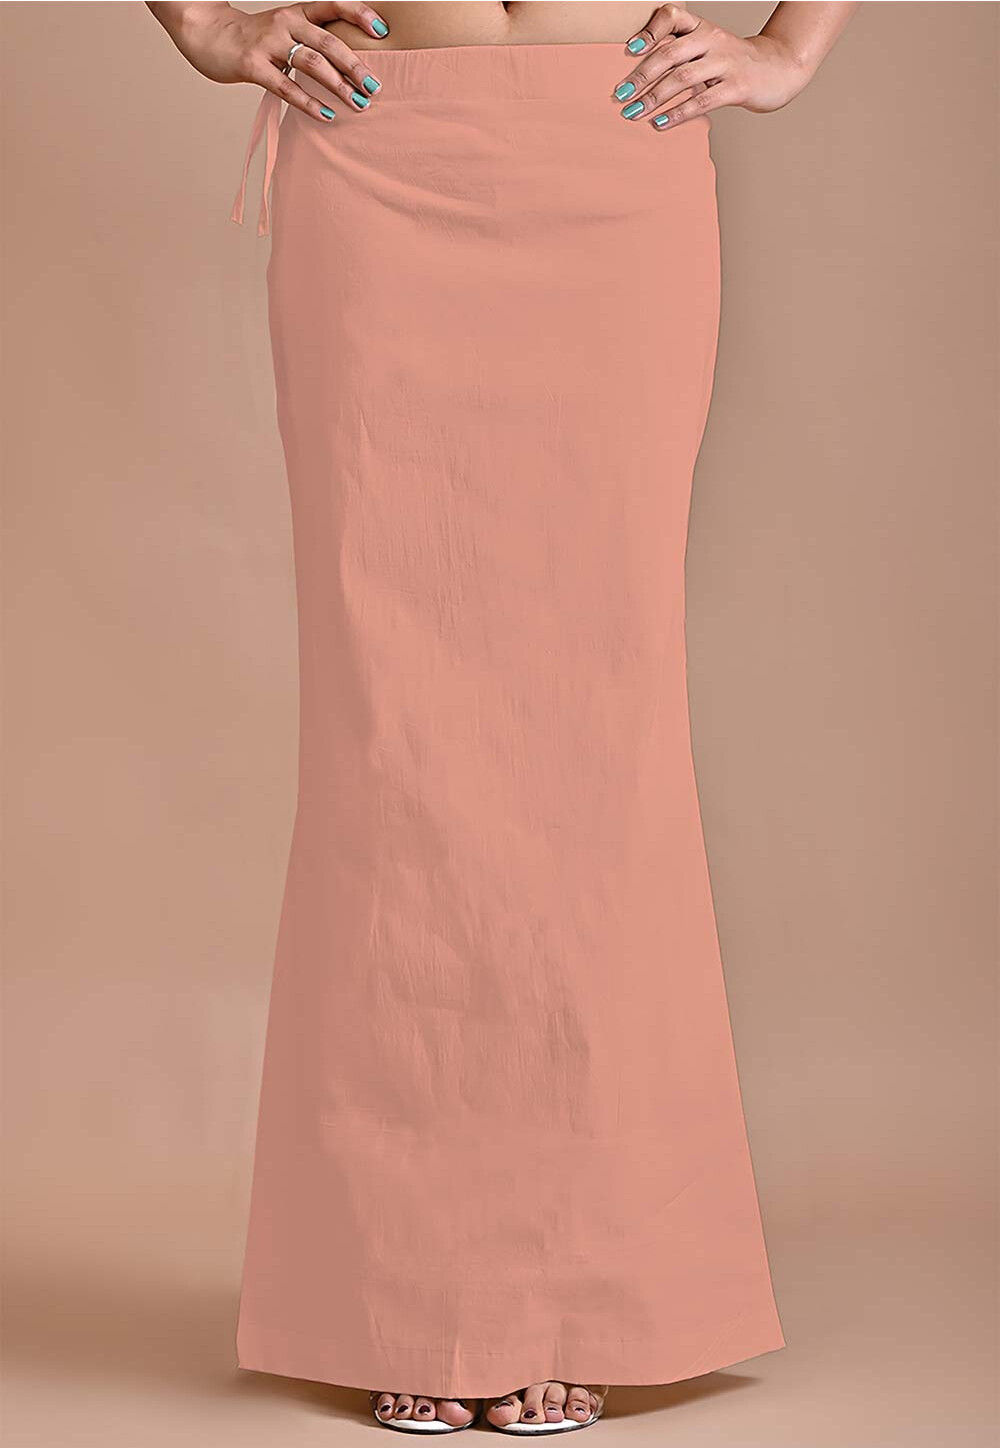 Solid Color Lycra Cotton Shapewear Petticoat in Beige : UUB1107